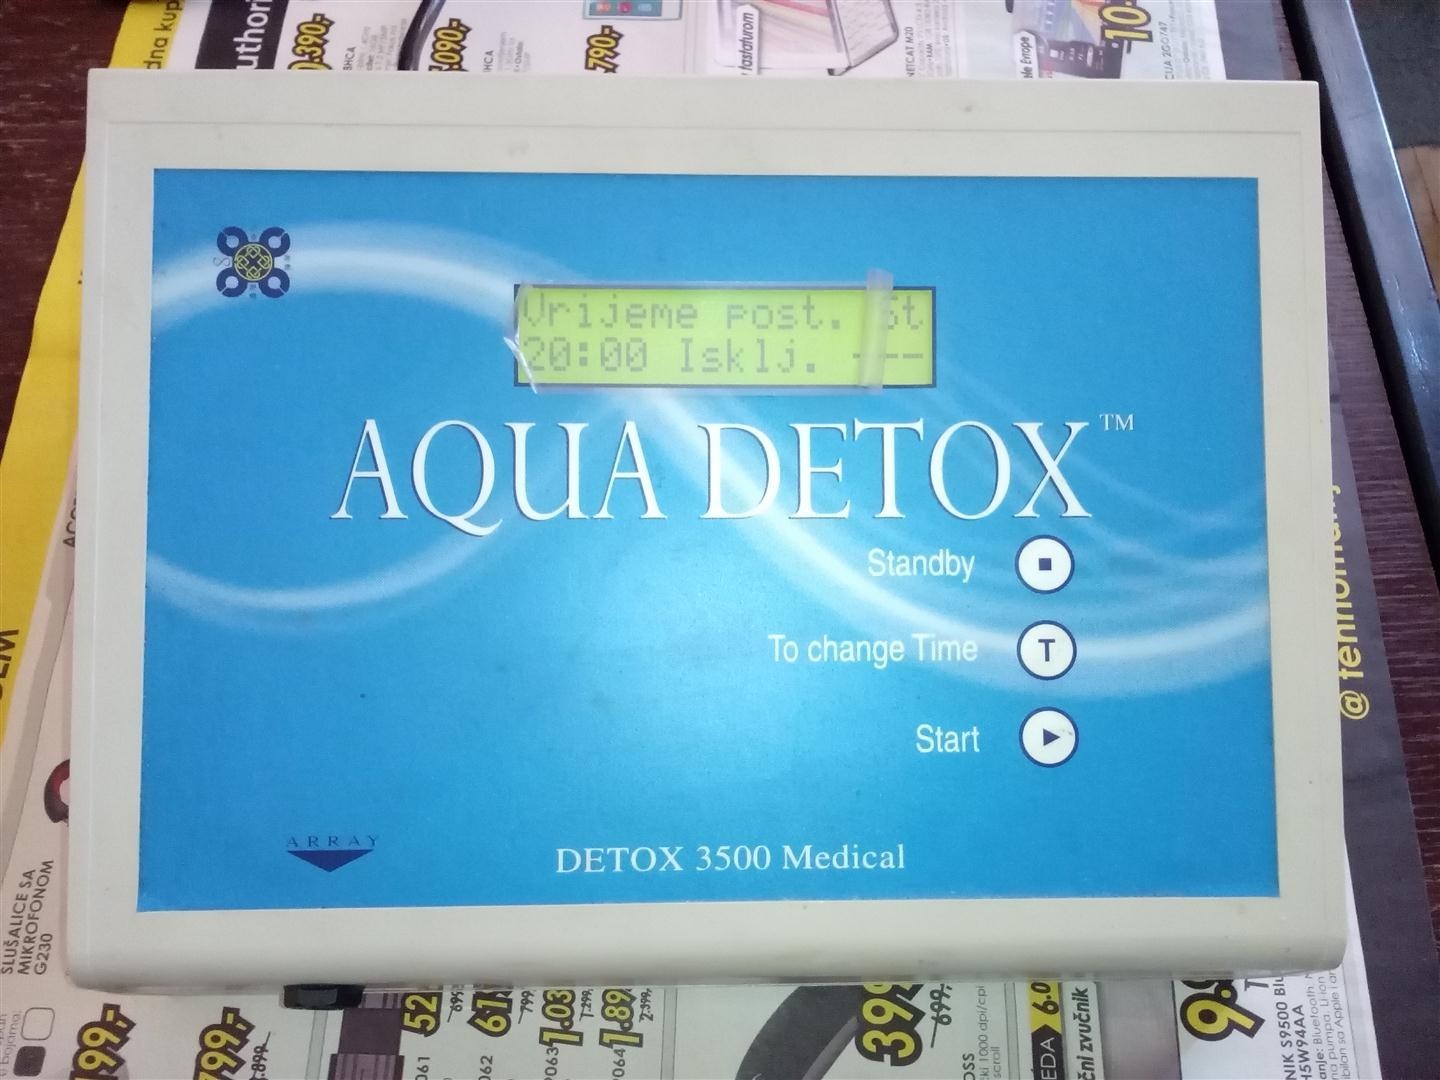 Aqua detox kadica prodaja